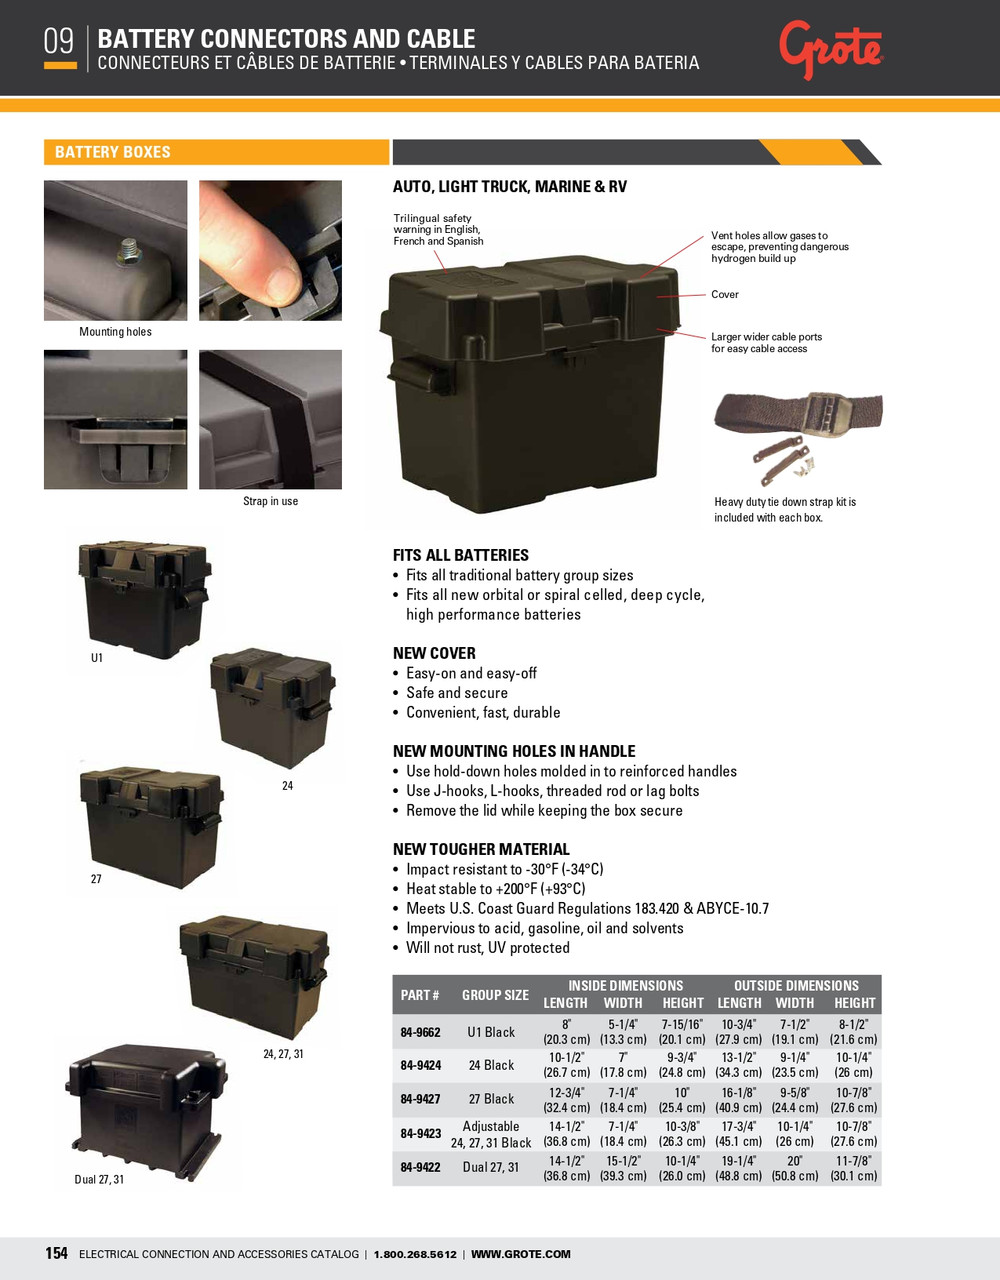 Battery Box Group U1 - Black  84-9662